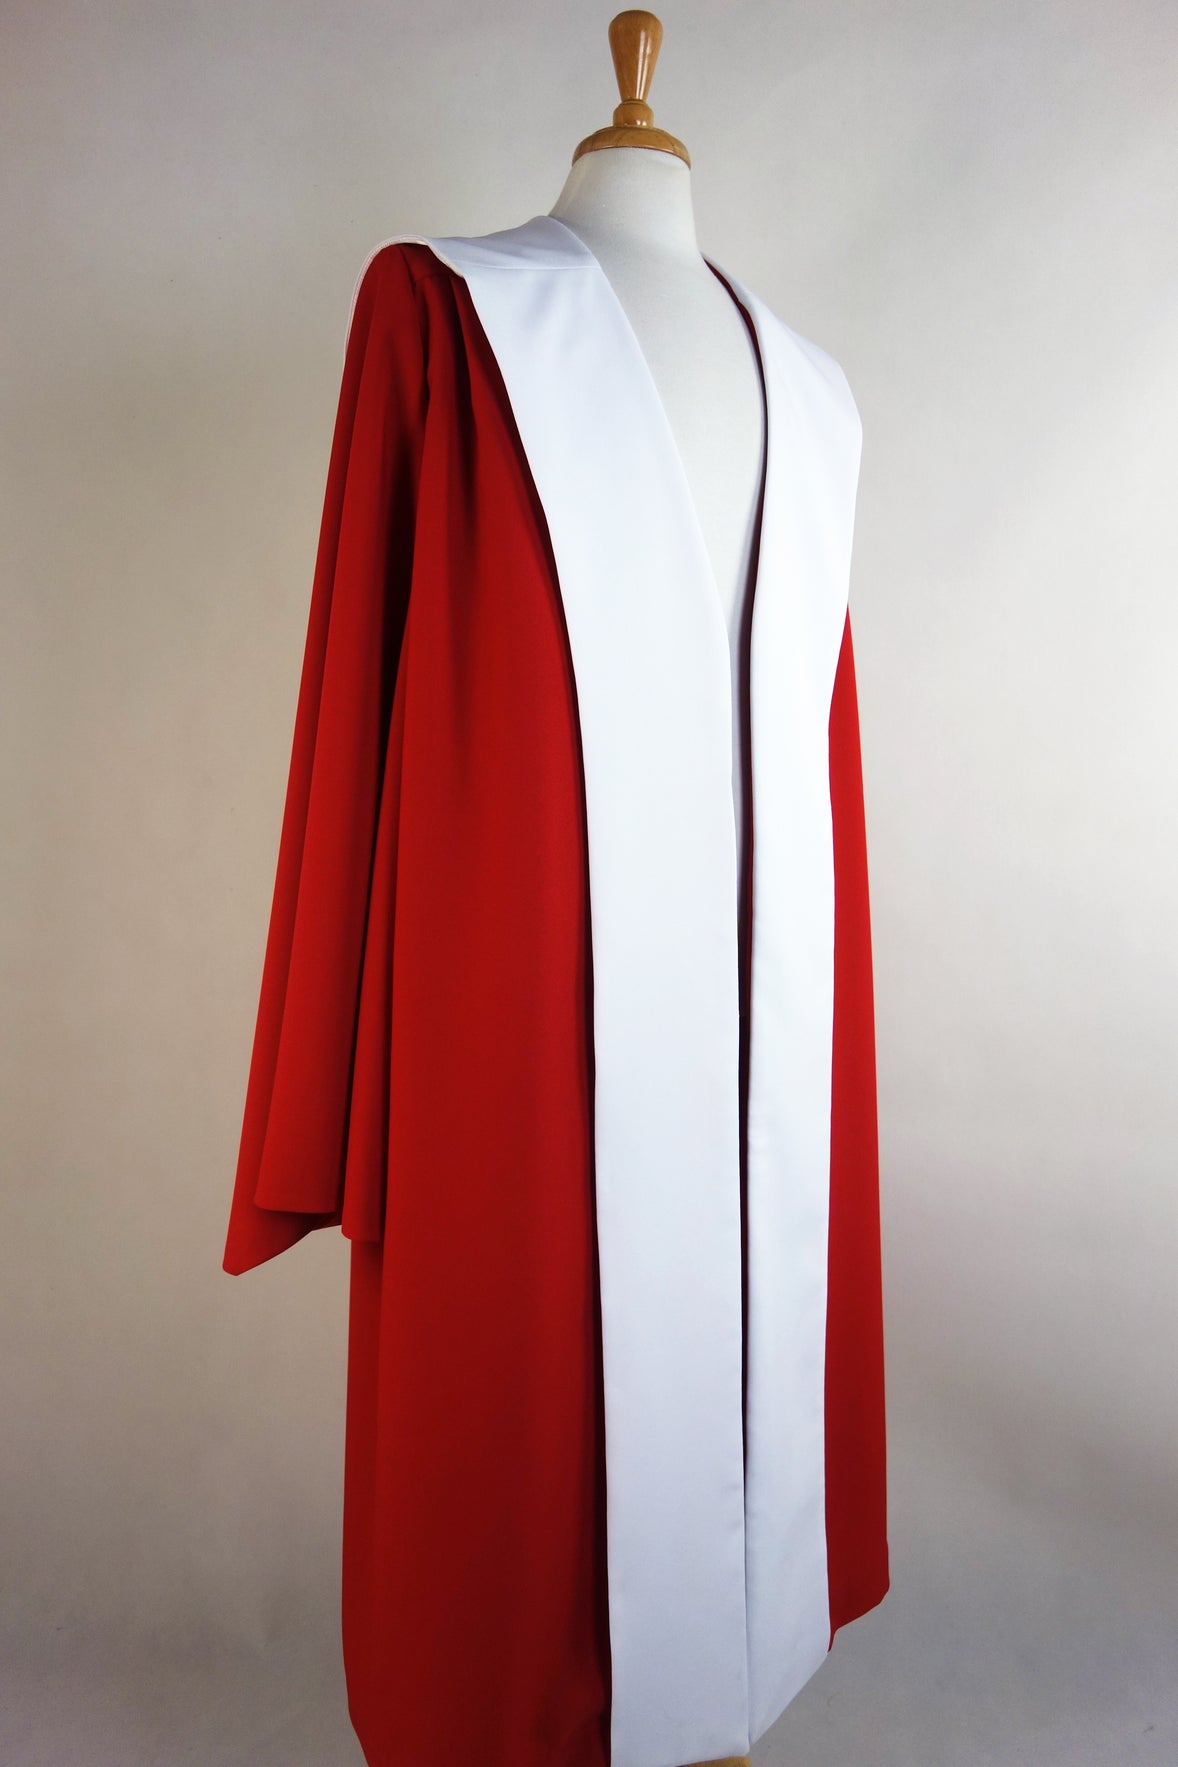 UTS PhD Graduation Gown Set - Gown and Bonnet